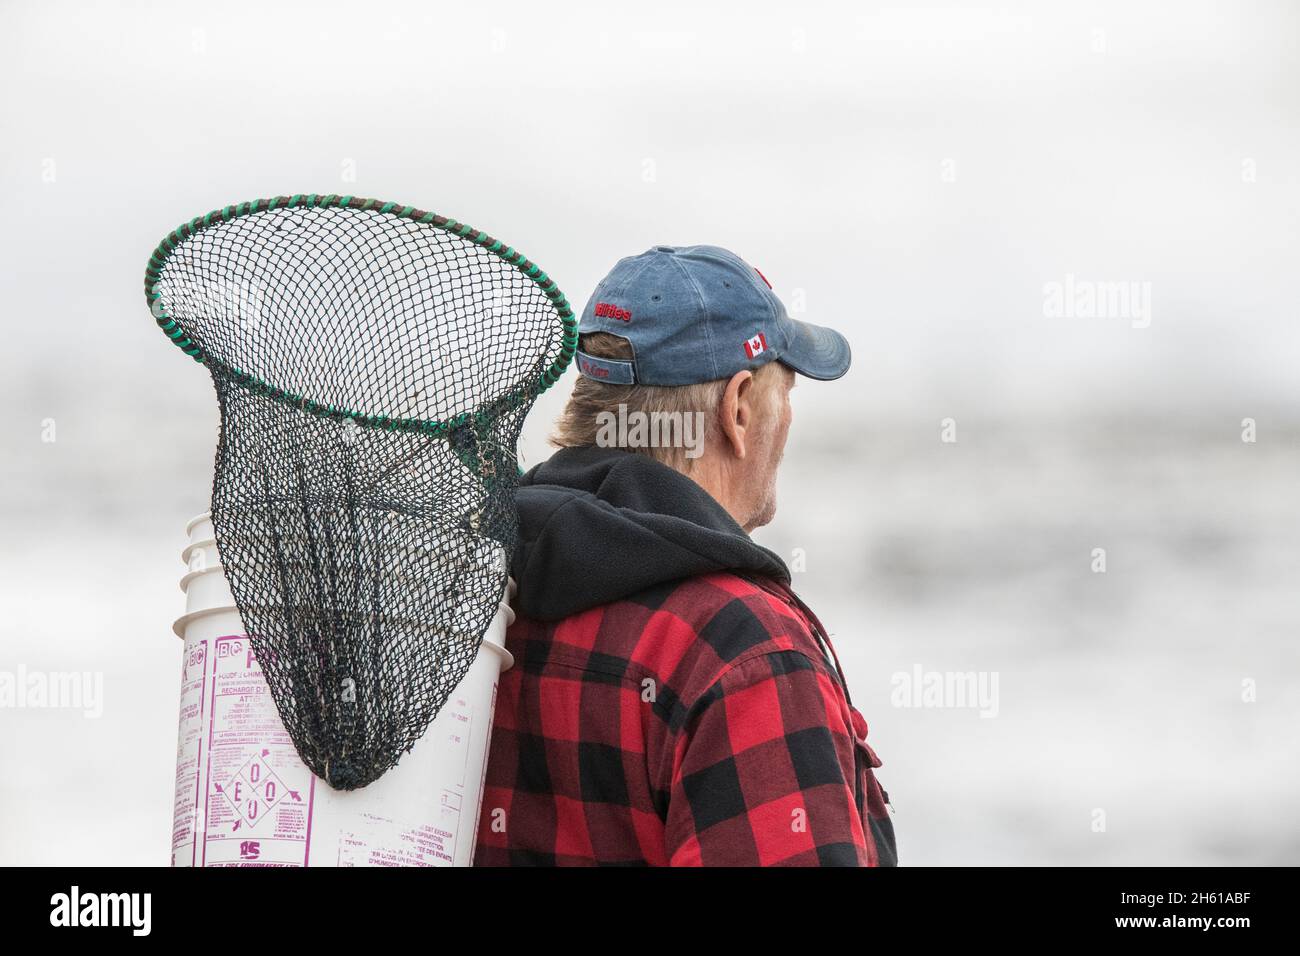 Local Newfoundlander with dip net, waiting for incoming capelin, Kippens, Newfoundland and Labrador NL, Canada Stock Photo